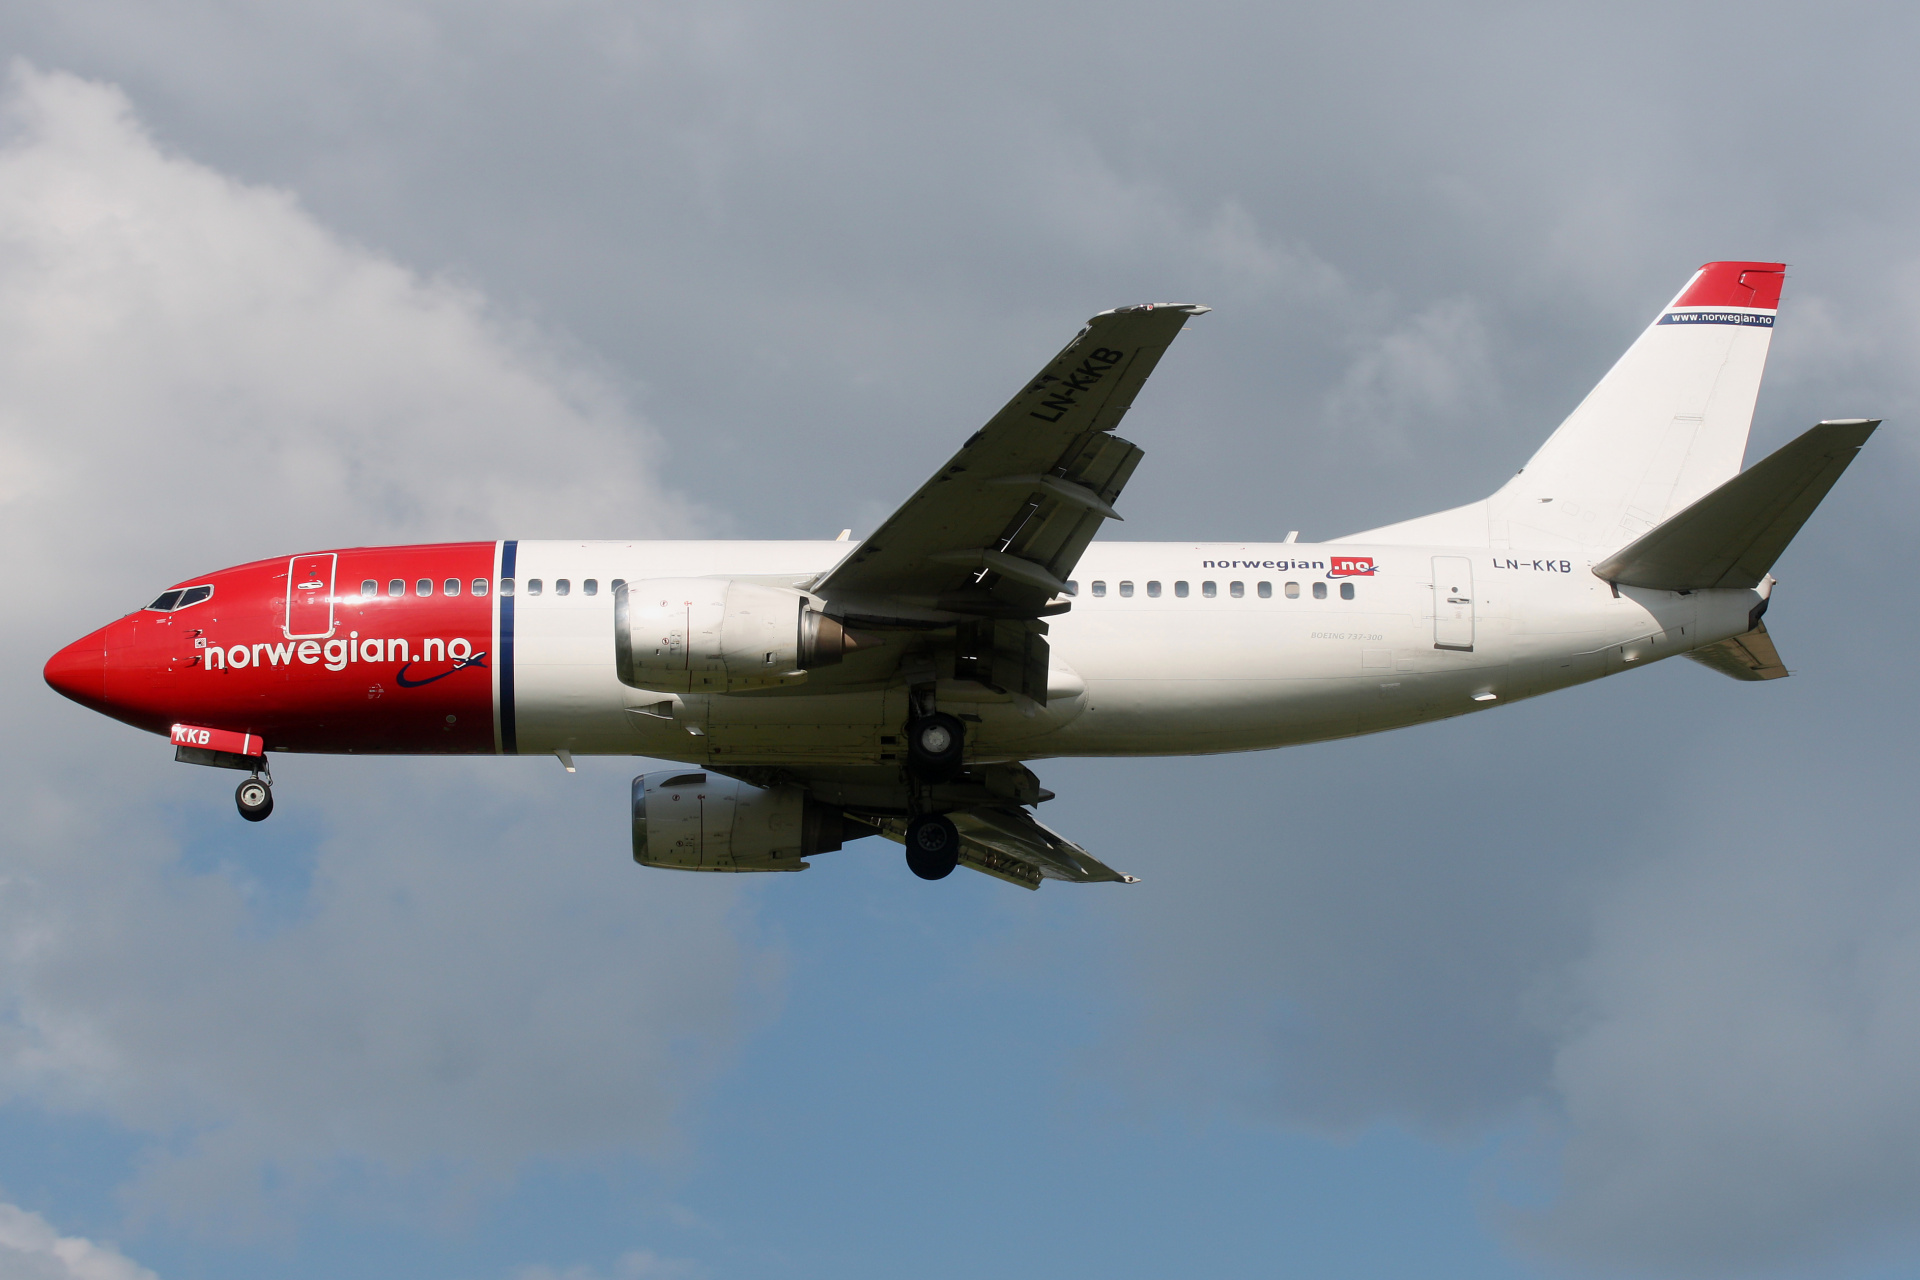 LN-KKB (Aircraft » EPWA Spotting » Boeing 737-300 » Norwegian Air Shuttle)